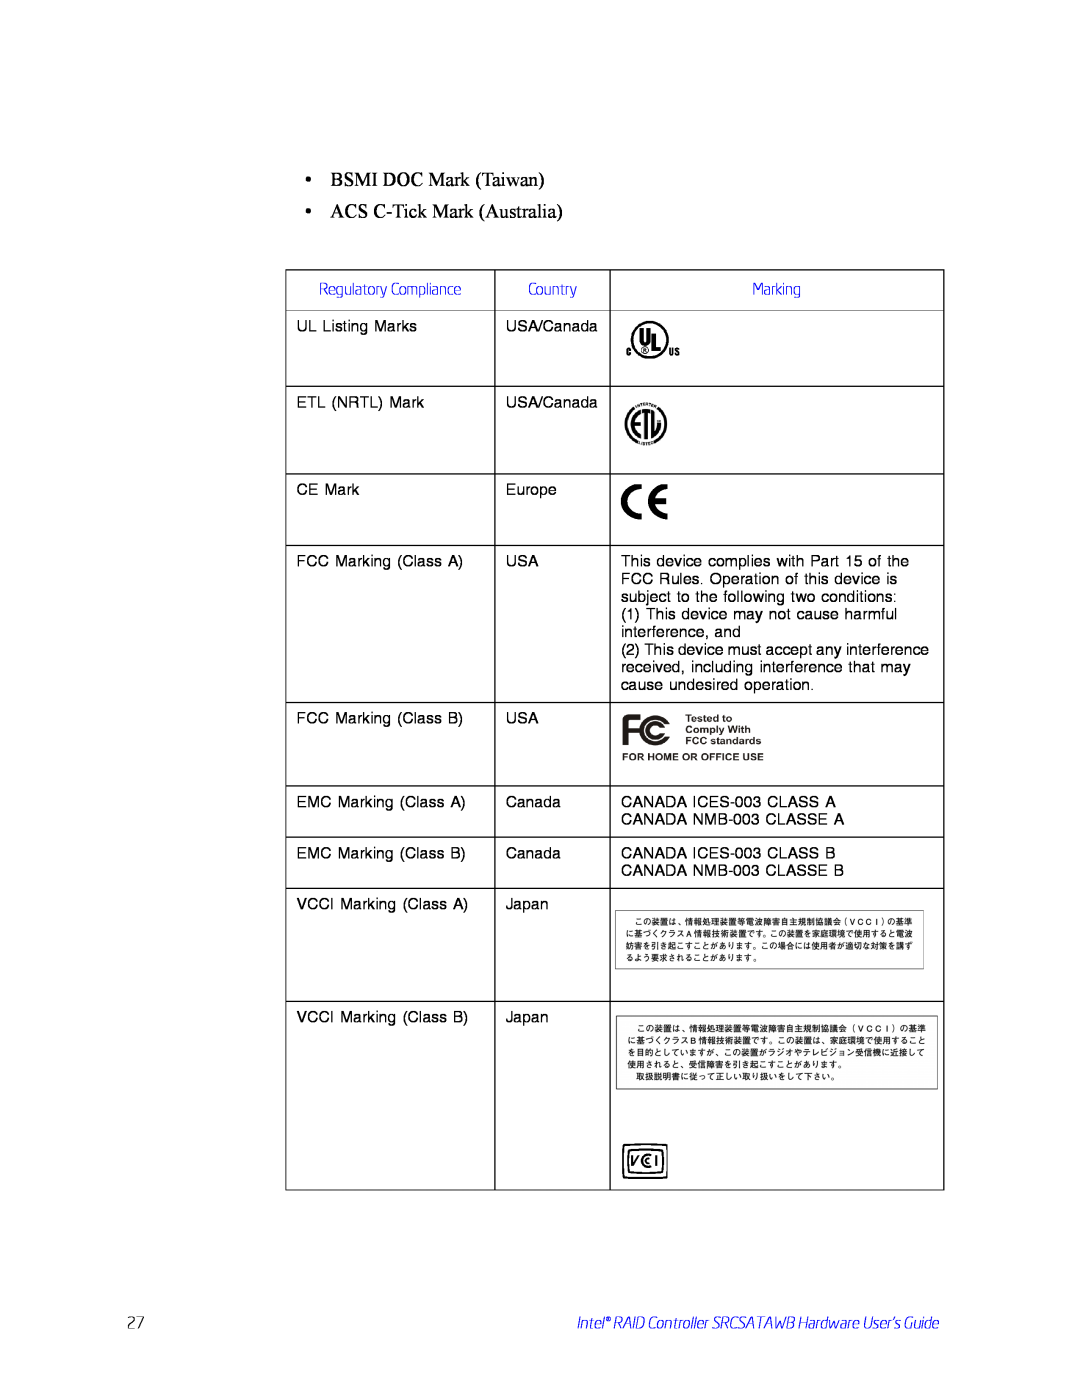 Intel SRCSATAWB manual •BSMI DOC Mark Taiwan •ACS C-TickMark Australia, Regulatory Compliance, Country, Marking 